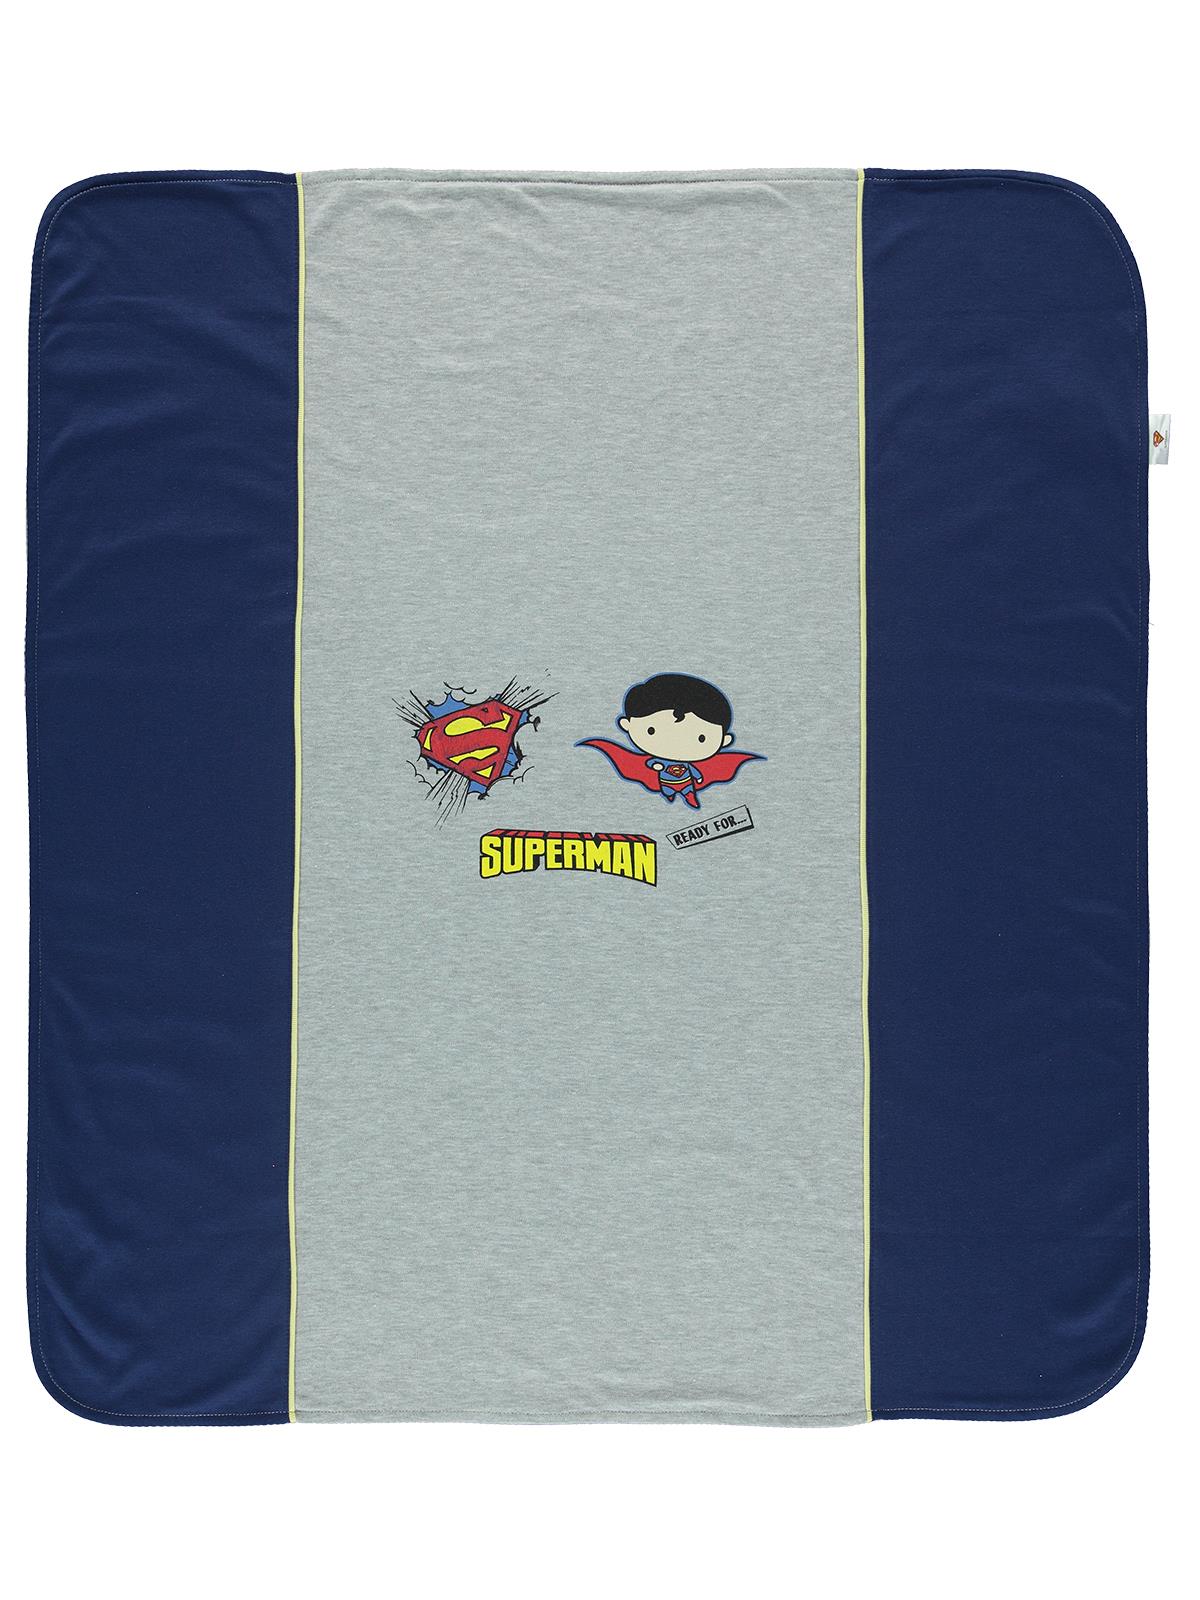 Superman Erkek Bebek Çift Kat Battaniye 80x90 cm Lacivert